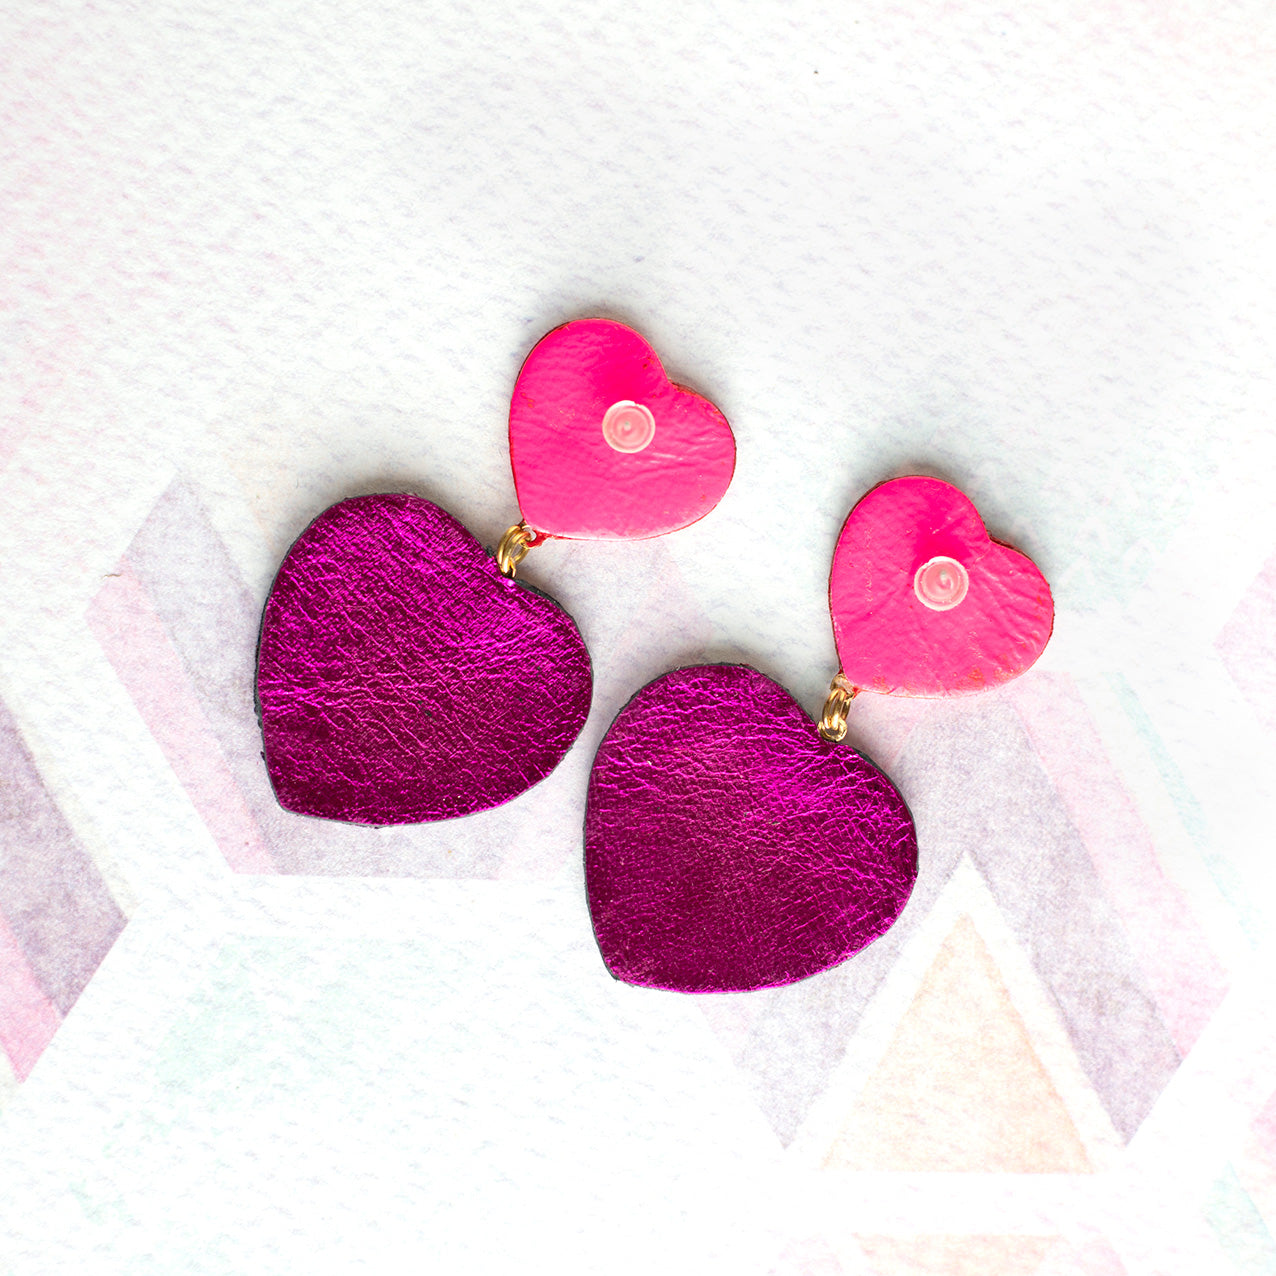 Heart earrings - neon pink leather and purple/fuchsia glitter